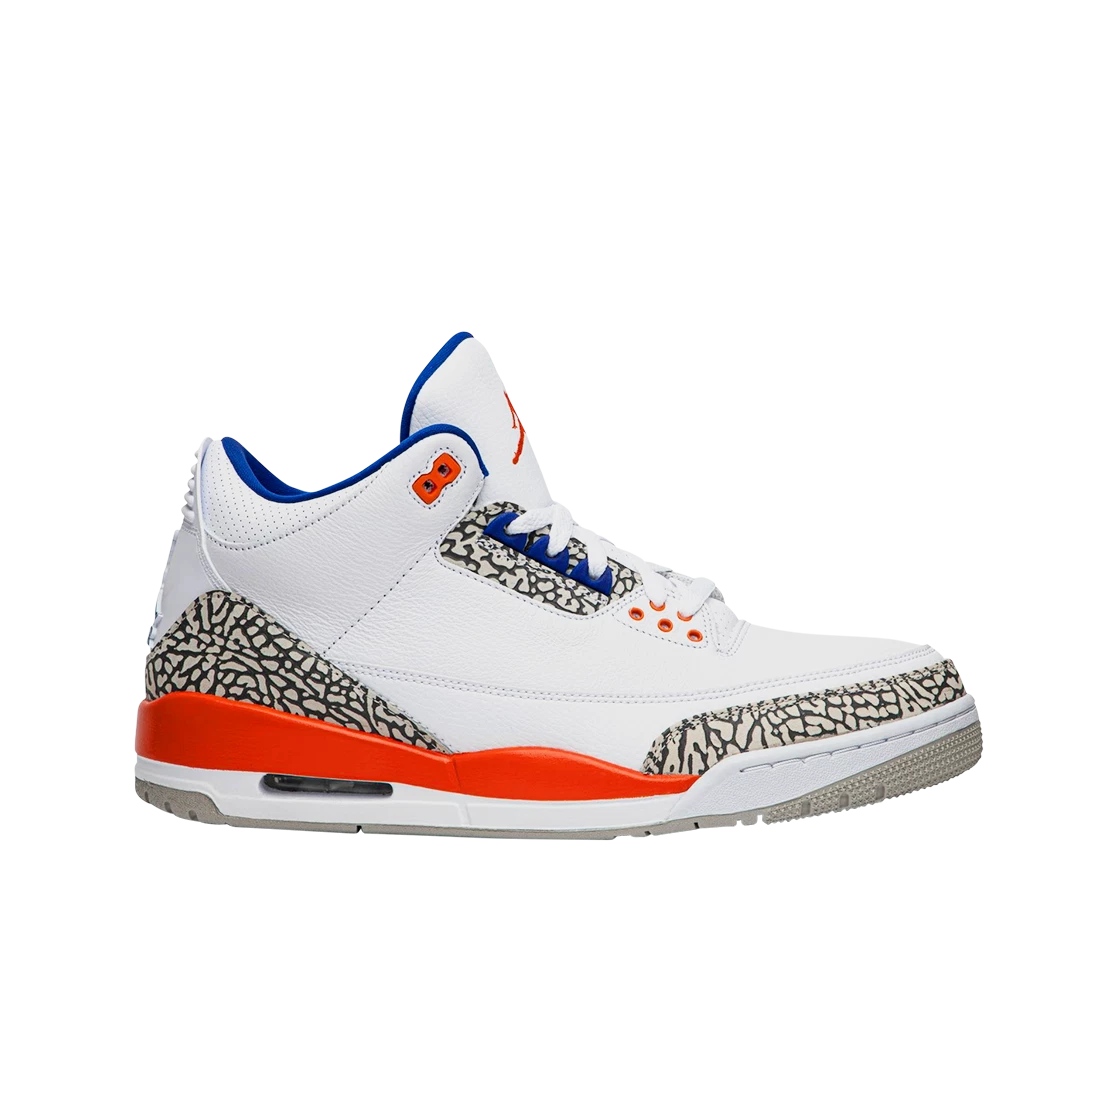 SASOM | shoes Jordan 3 Retro Knicks Check the latest price now!